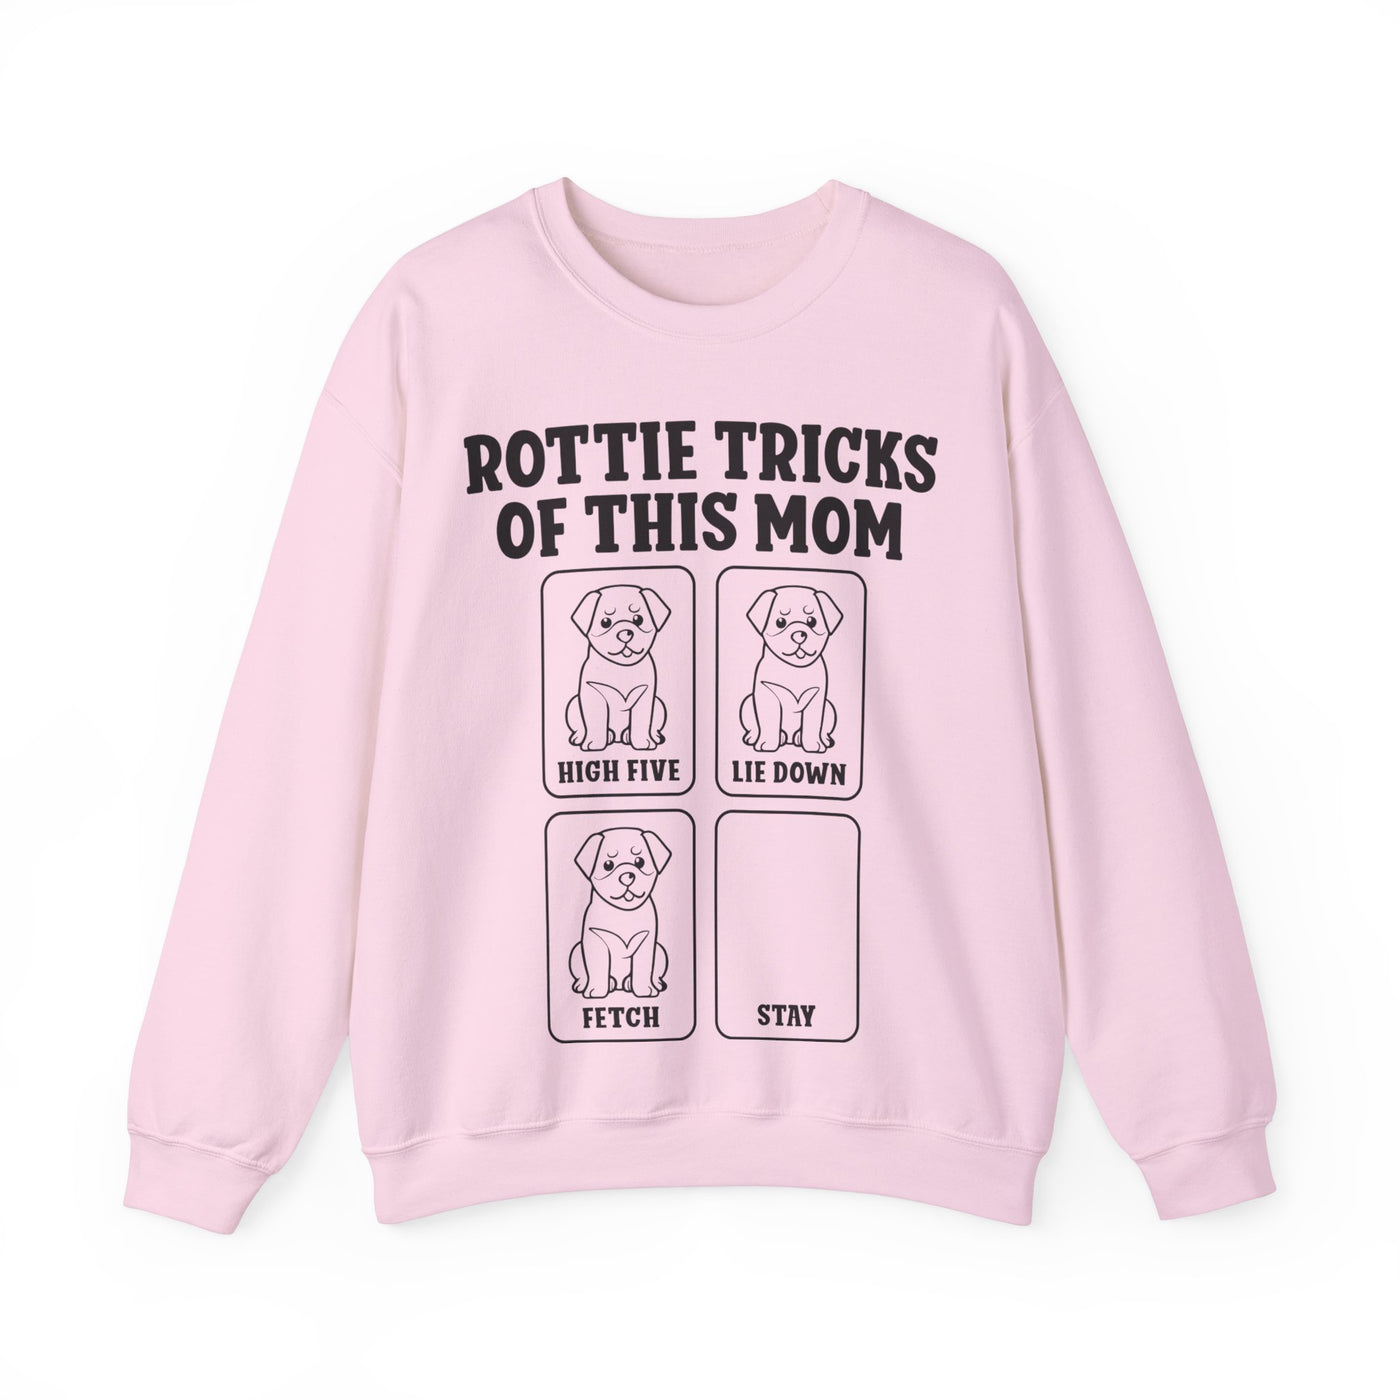 Rottie Tricks Sweatshirt